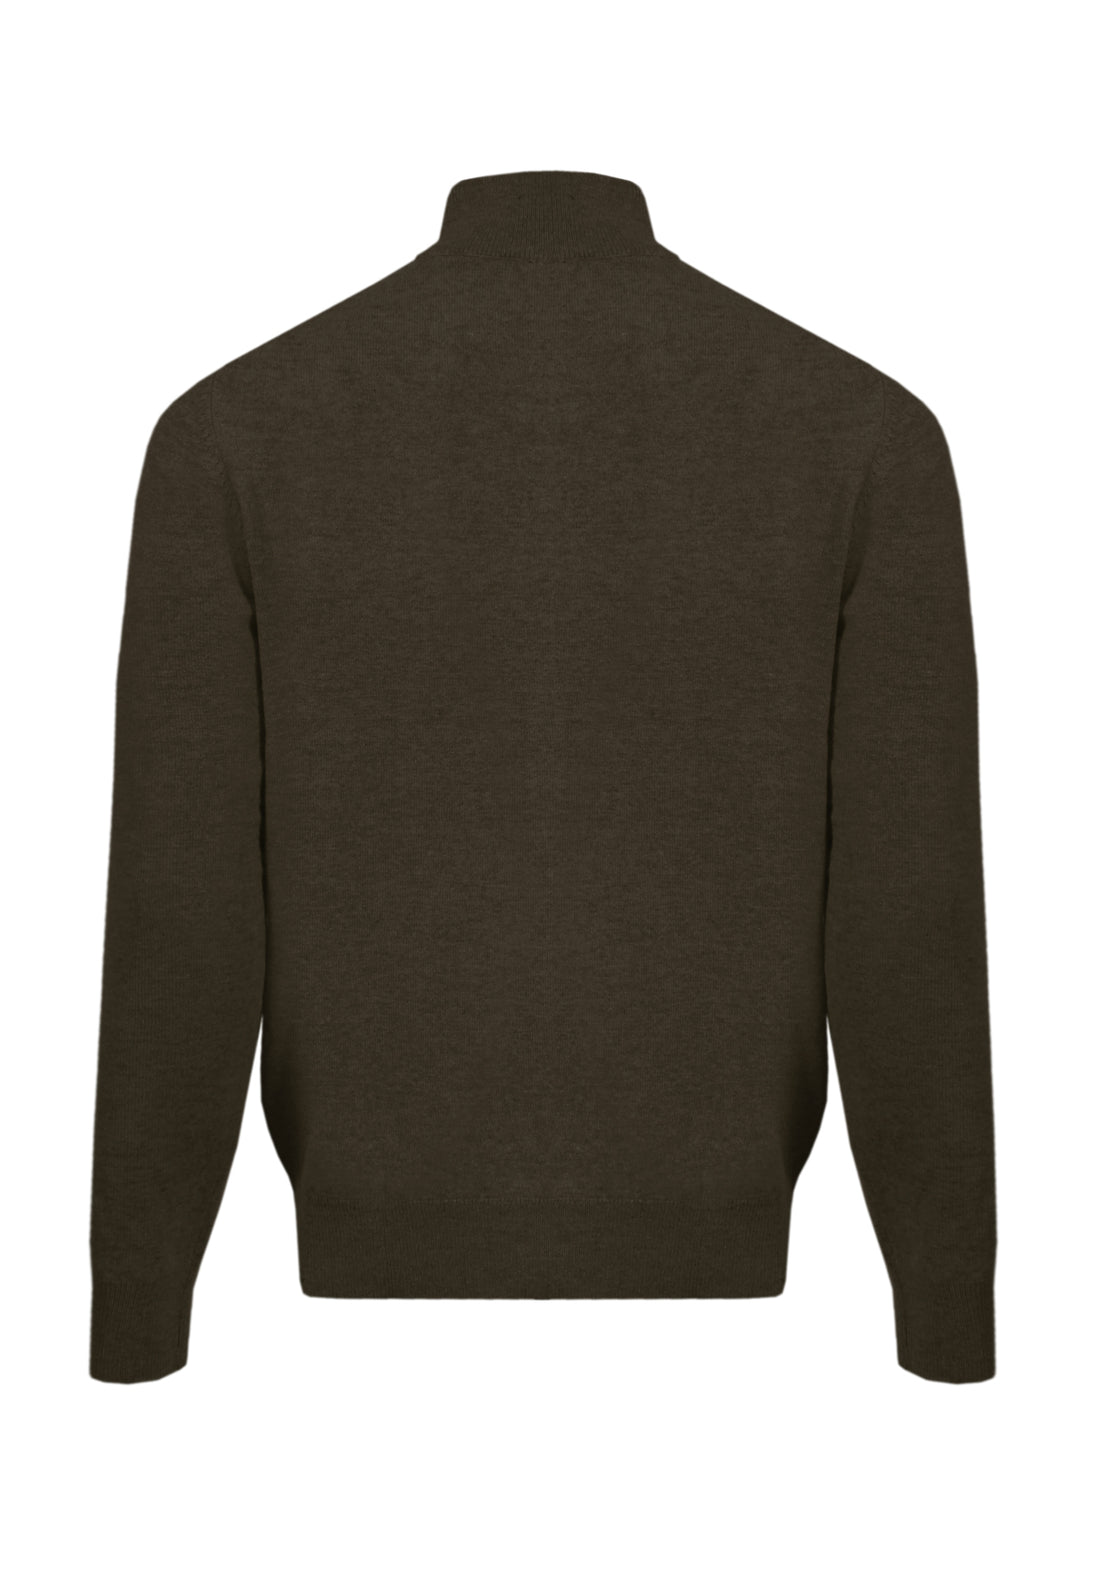 Sweater with contrasting zip closure in suede - dark brown